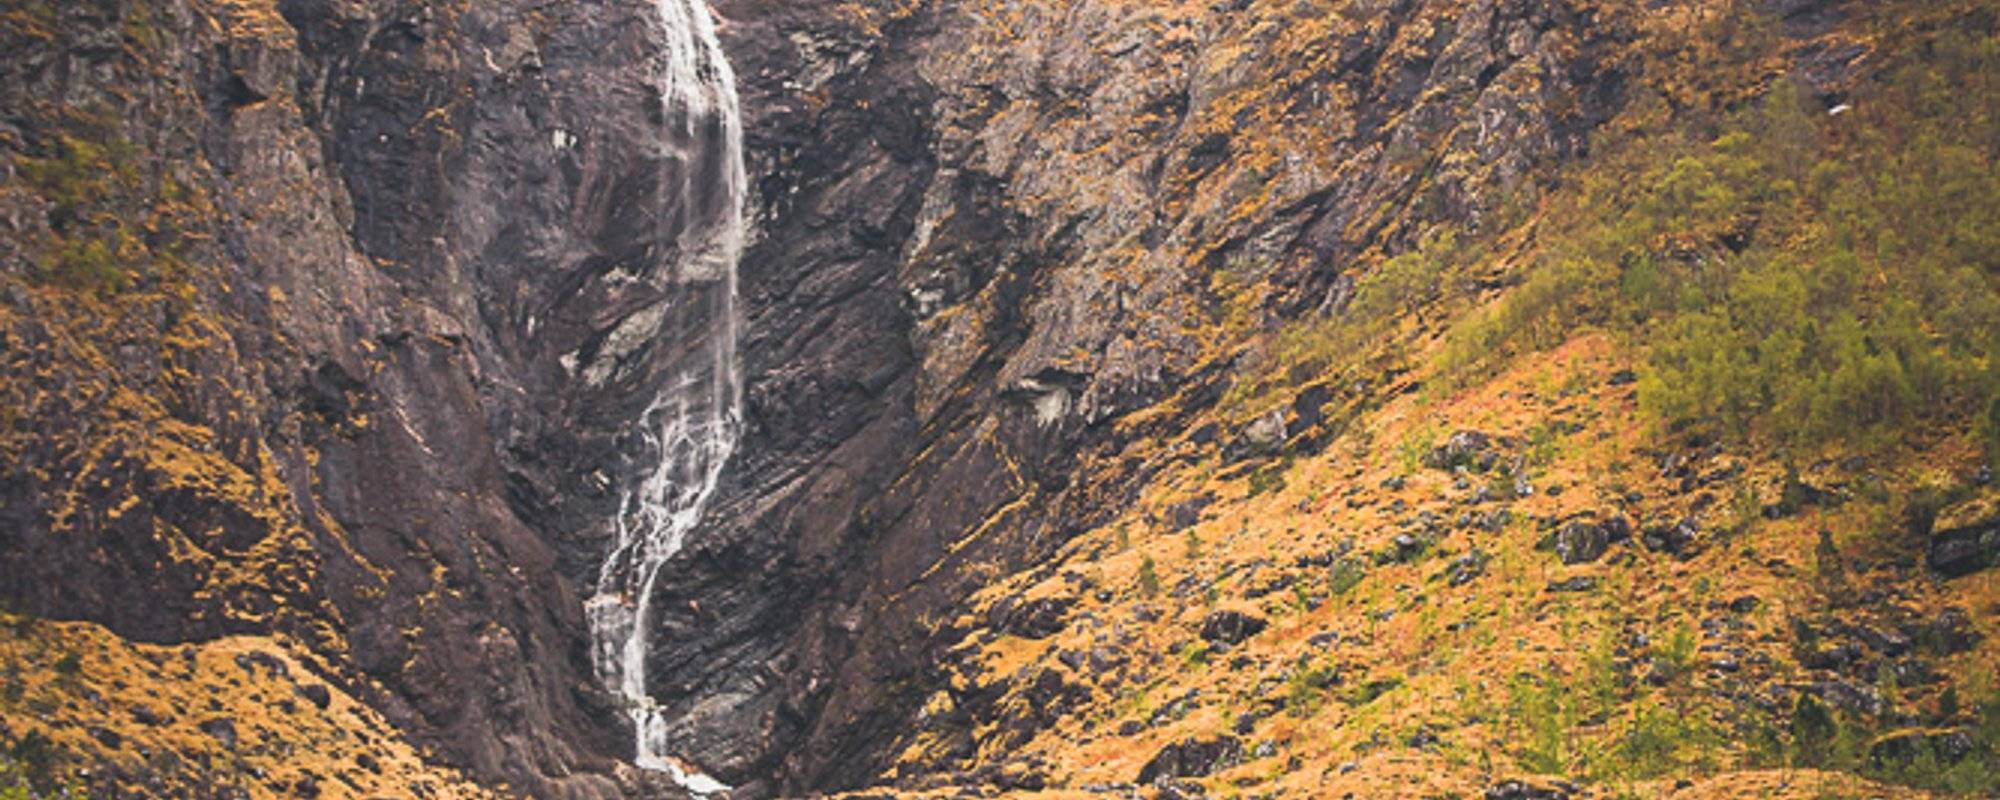 Travel Norway #25: Mardalsfossen - Biggest waterfall of Norway???